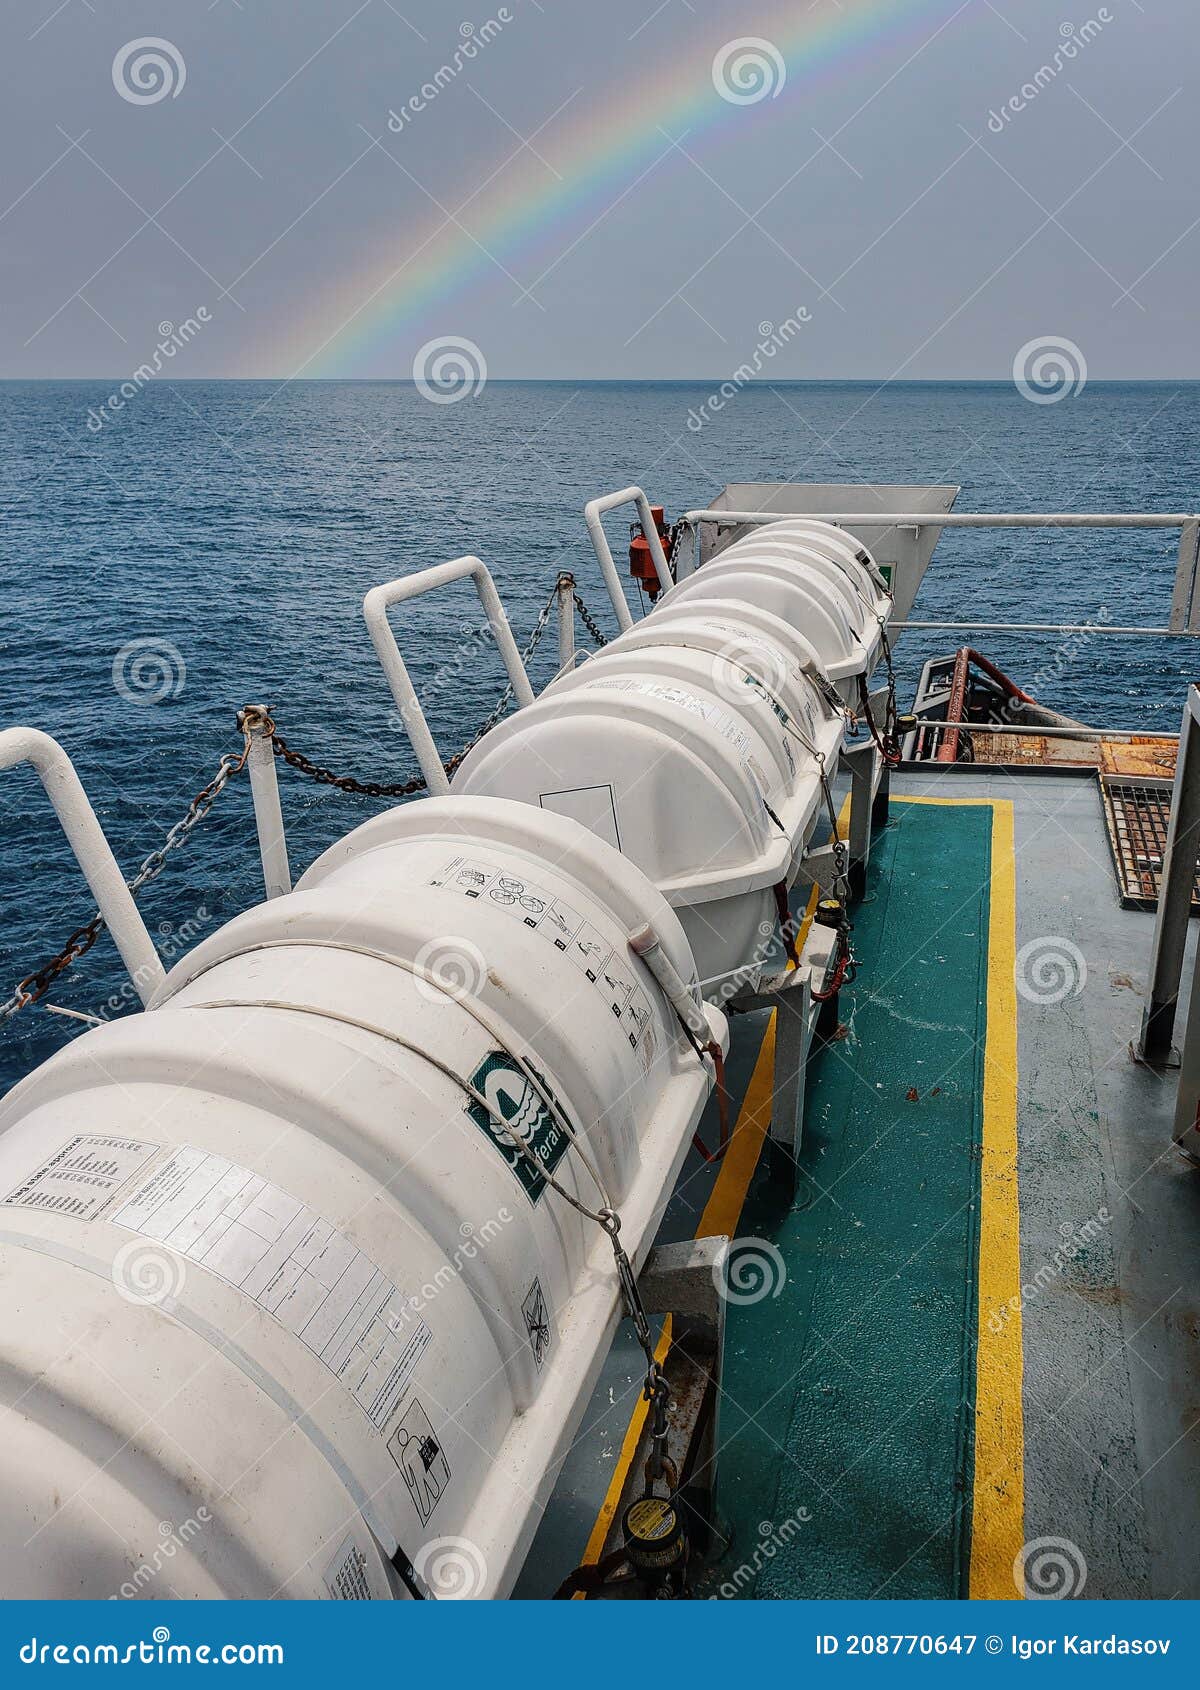 liferafts on the deck of ocean offshore vessel. lsa life saving equipment.